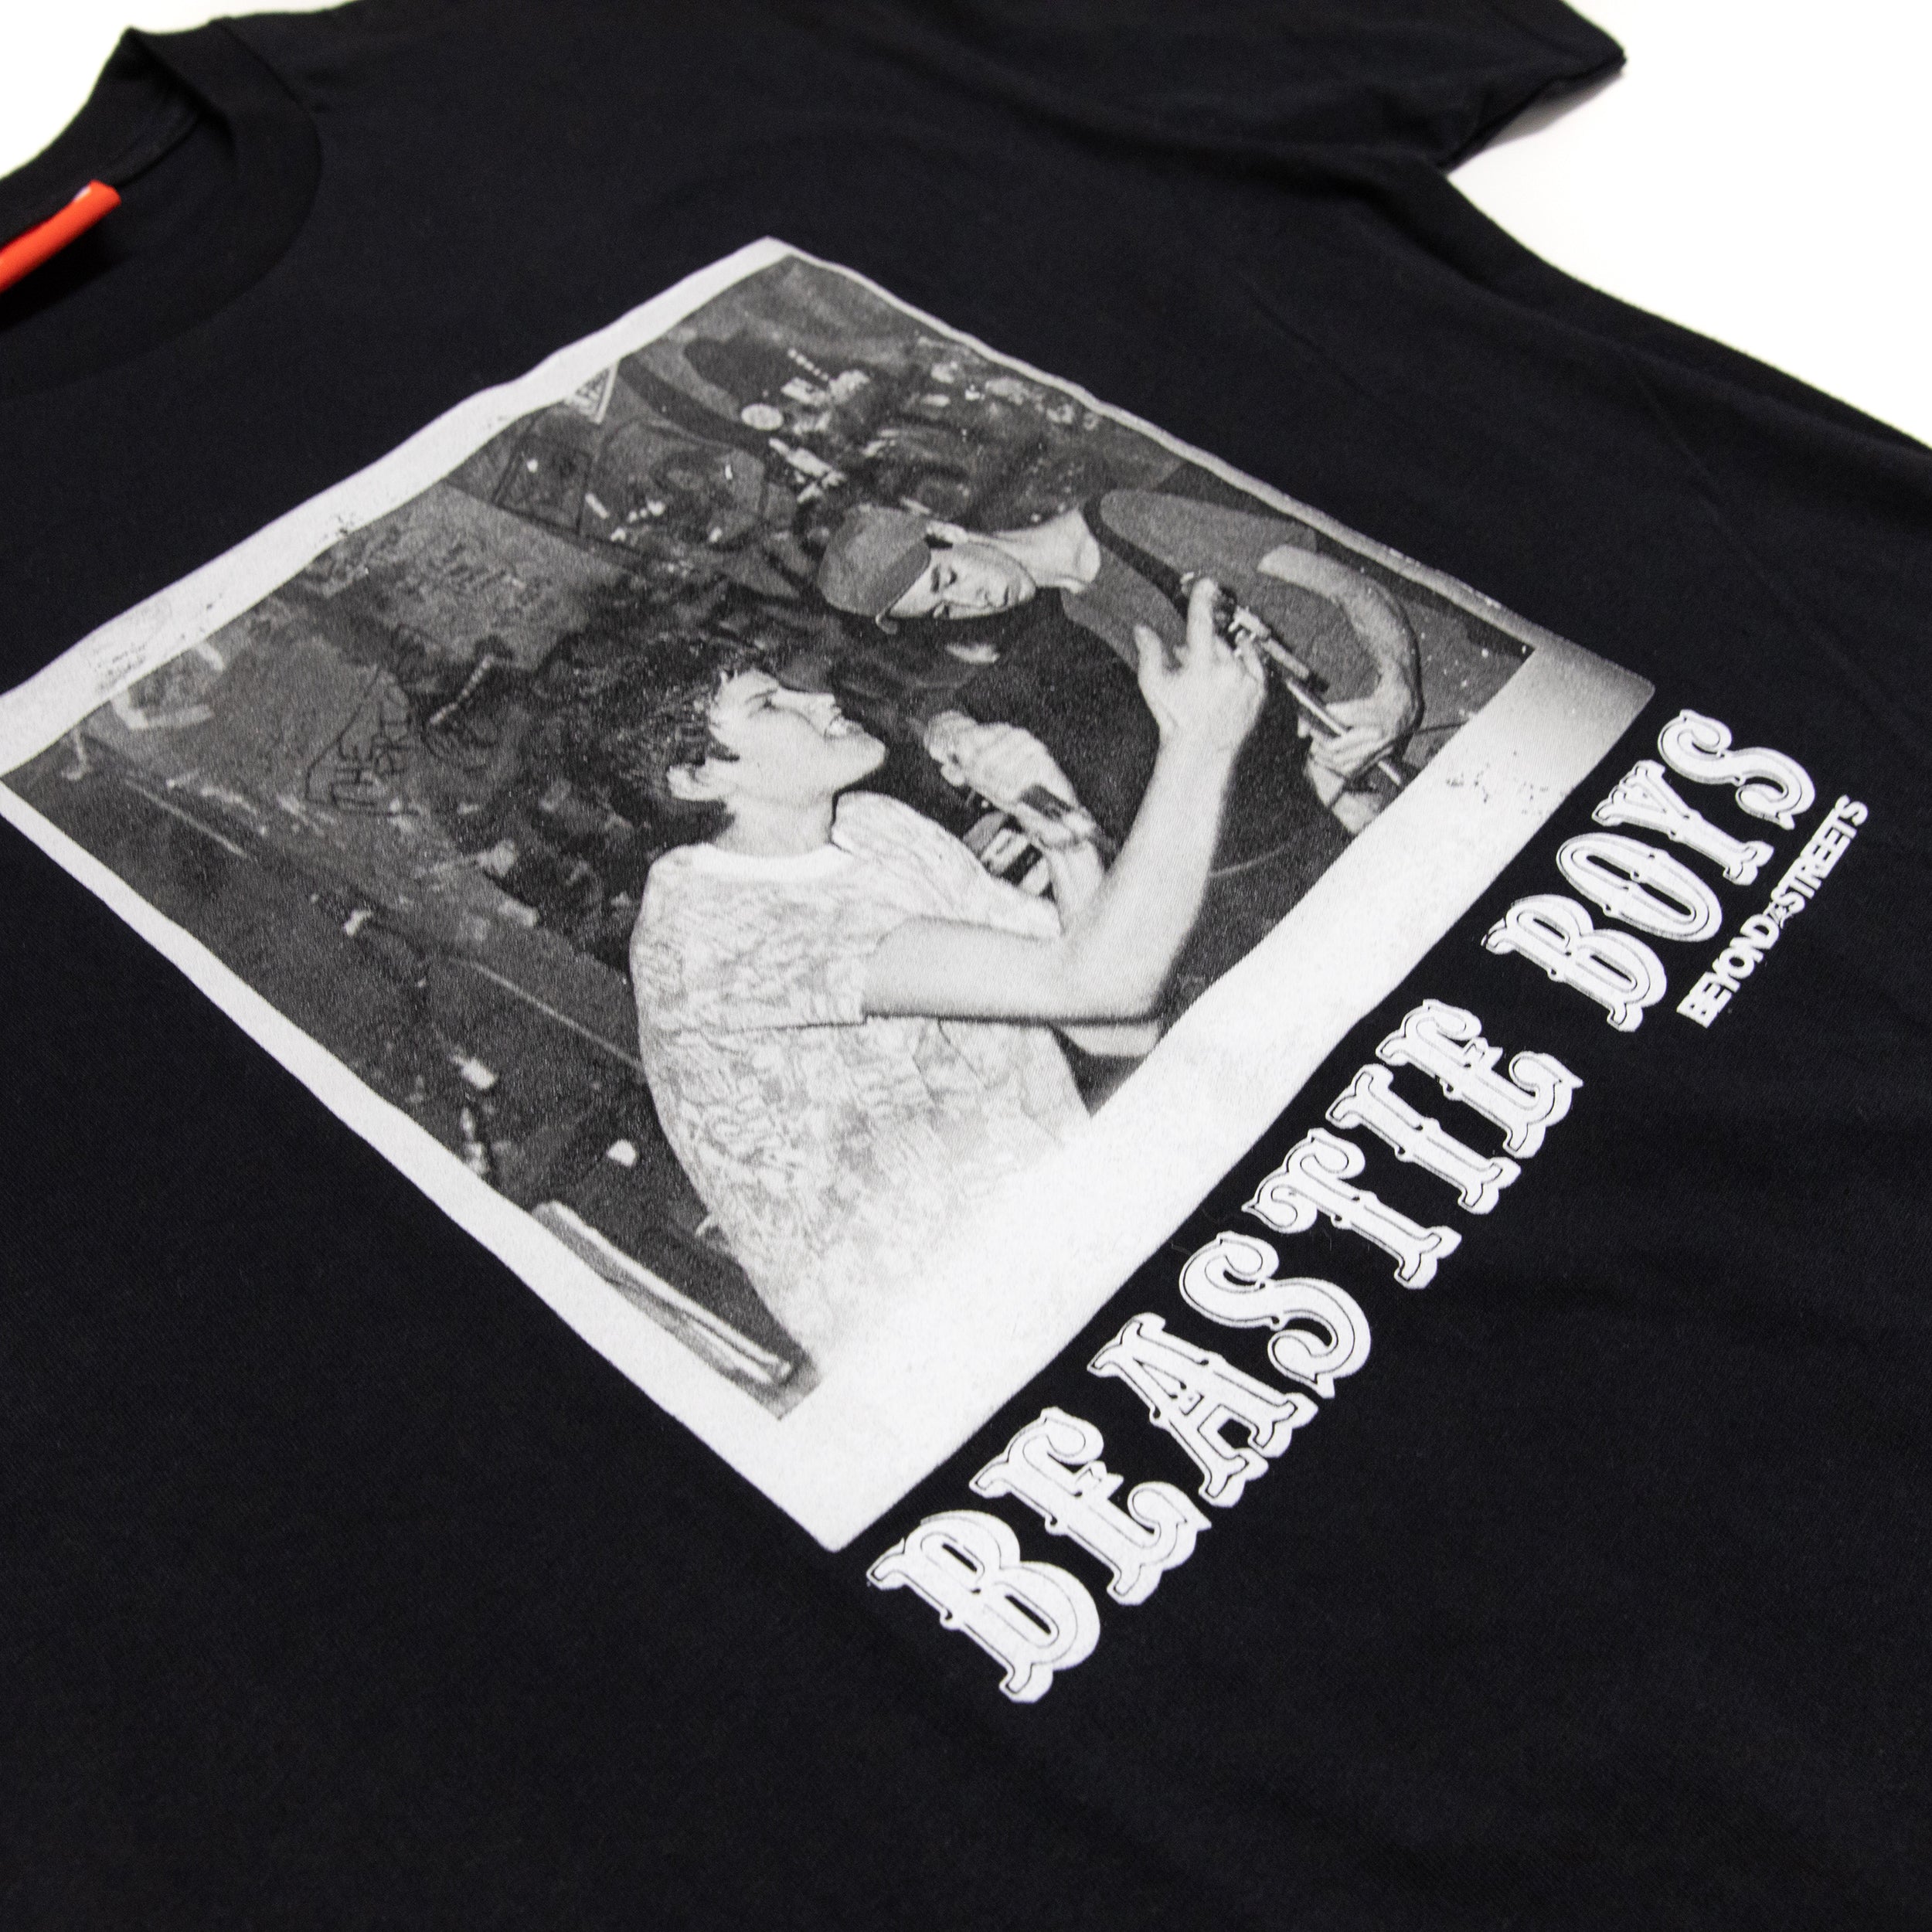 Beastie Boys - BEYOND THE STREETS